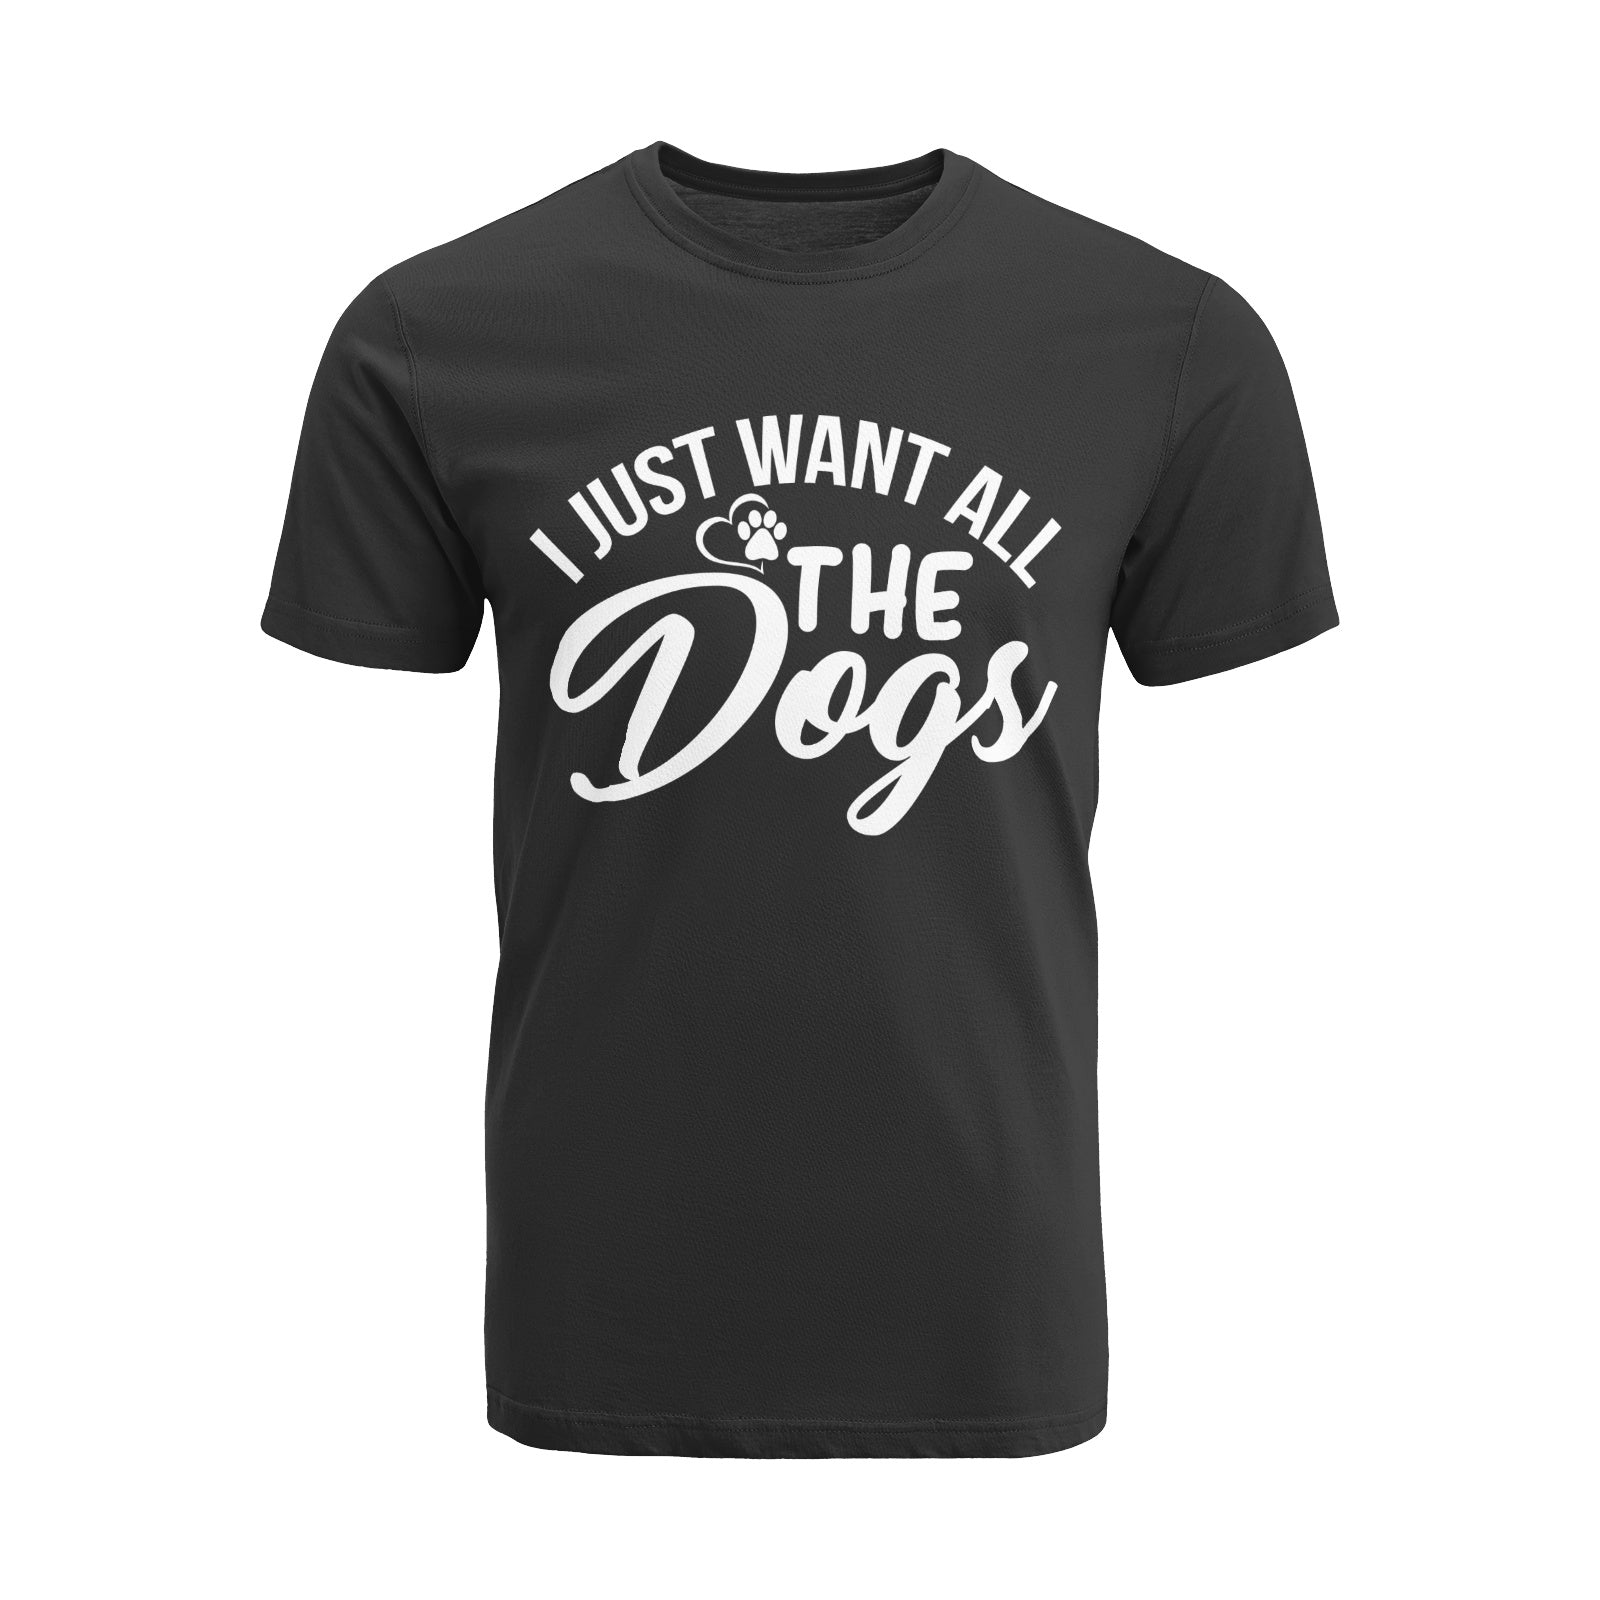 Unisex Short Sleeve Crew Neck Cotton Jersey T-Shirt DOG 01 - Tara-Outfits.com